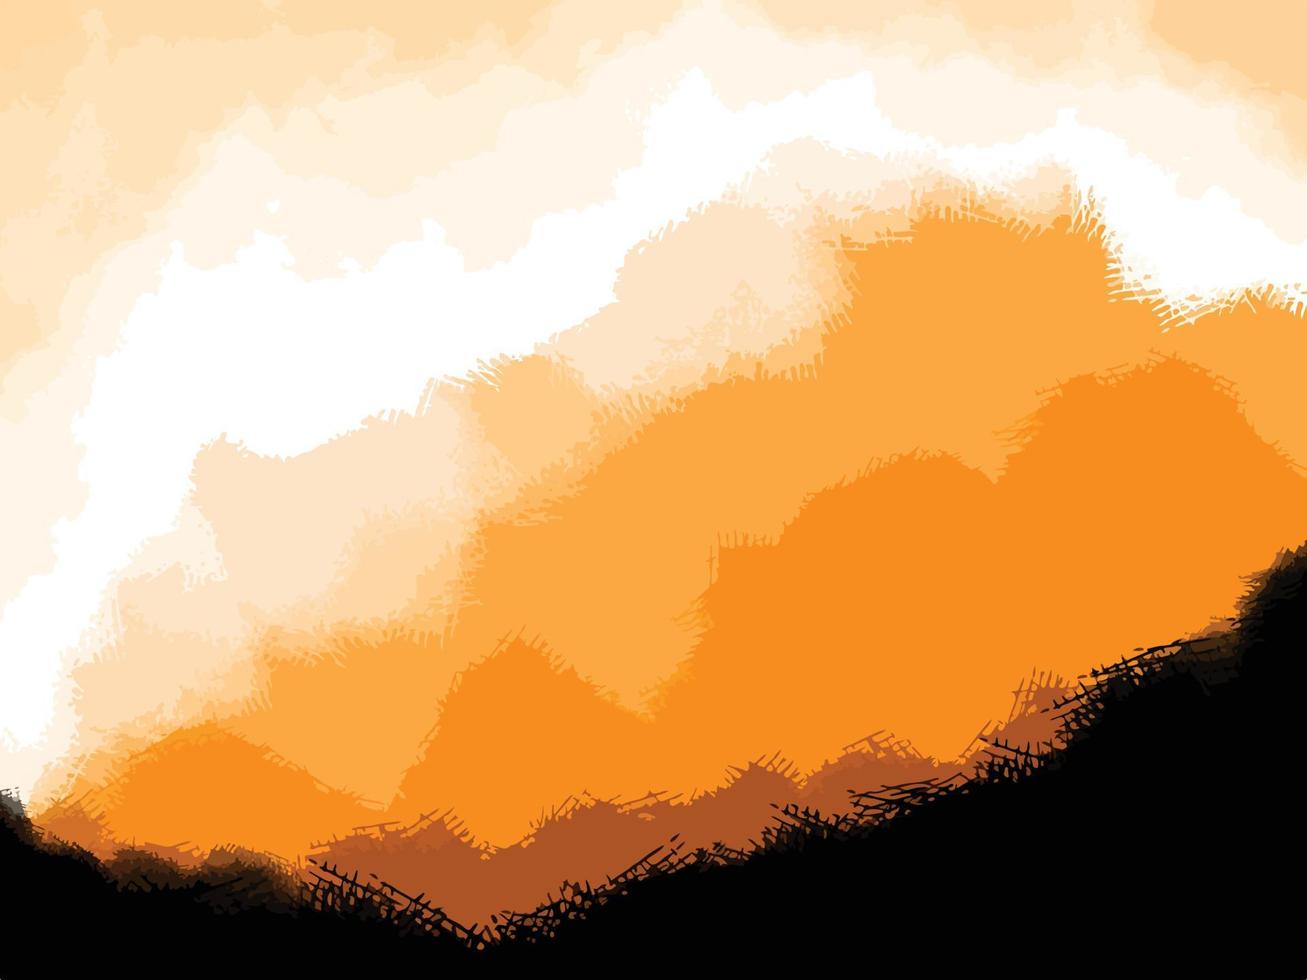 frio texturizado amarillento naranja nube con negro decoración en el fondo vector antecedentes aislado en horizontal paisaje conformado modelo. vector fondo de pantalla para social medios de comunicación o sitio web cubrir correo.